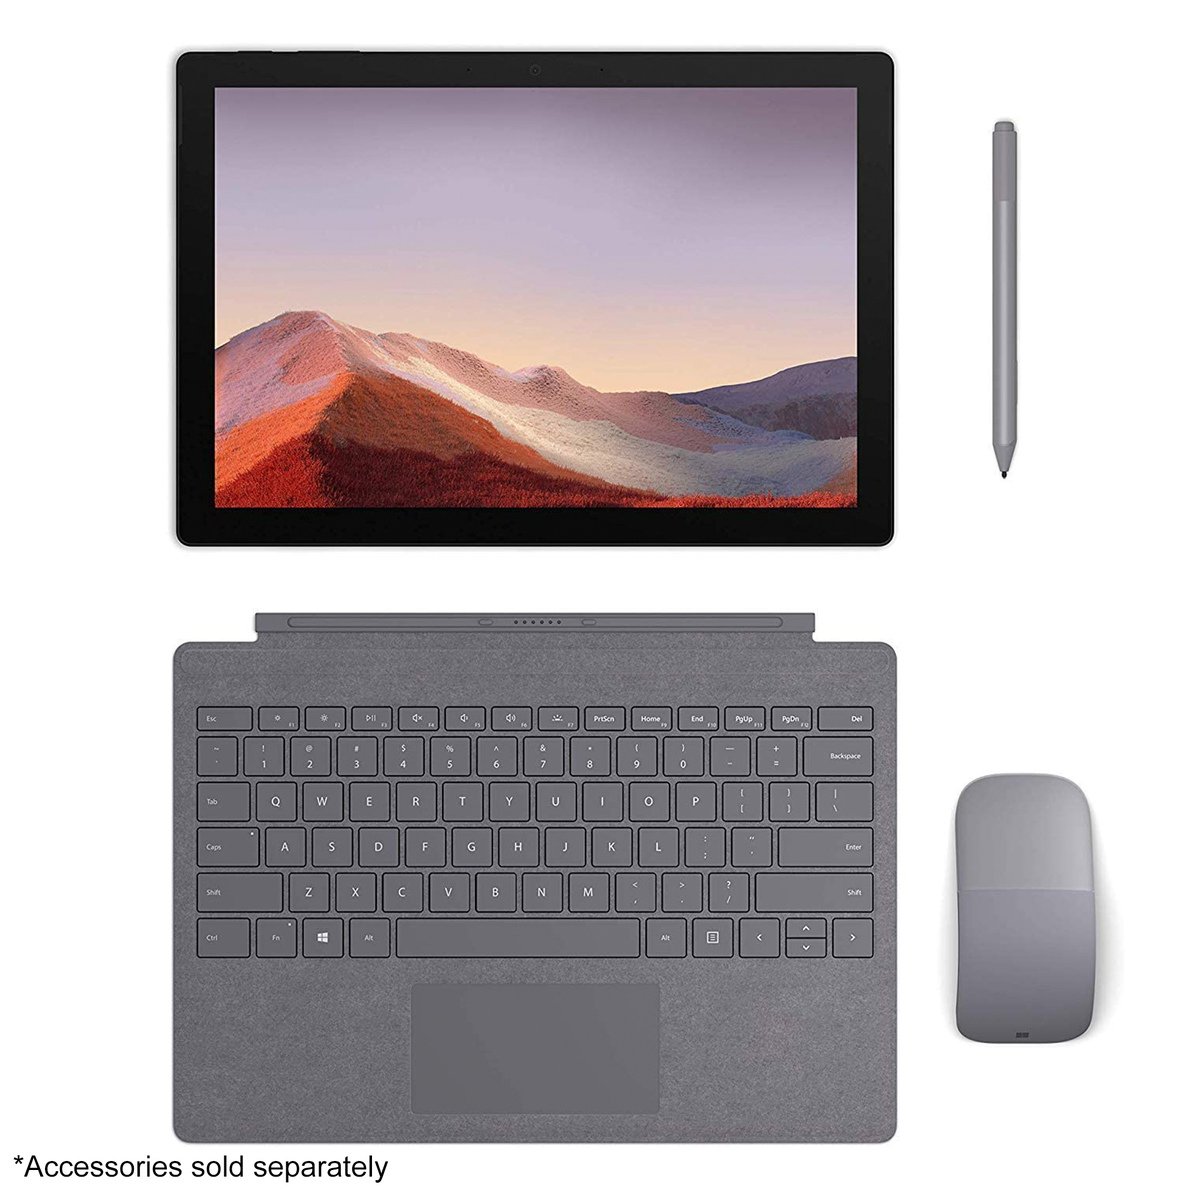 Microsoft Surface Pro 7 (VAT-00020), 2-in-1 Laptop, Intel Core i7-1065G7, 12.3 Inch, 512GB SSD, 16GB RAM, Intel Iris Plus Graphics, Windows 10, No Keyboard, Black+Type Cover